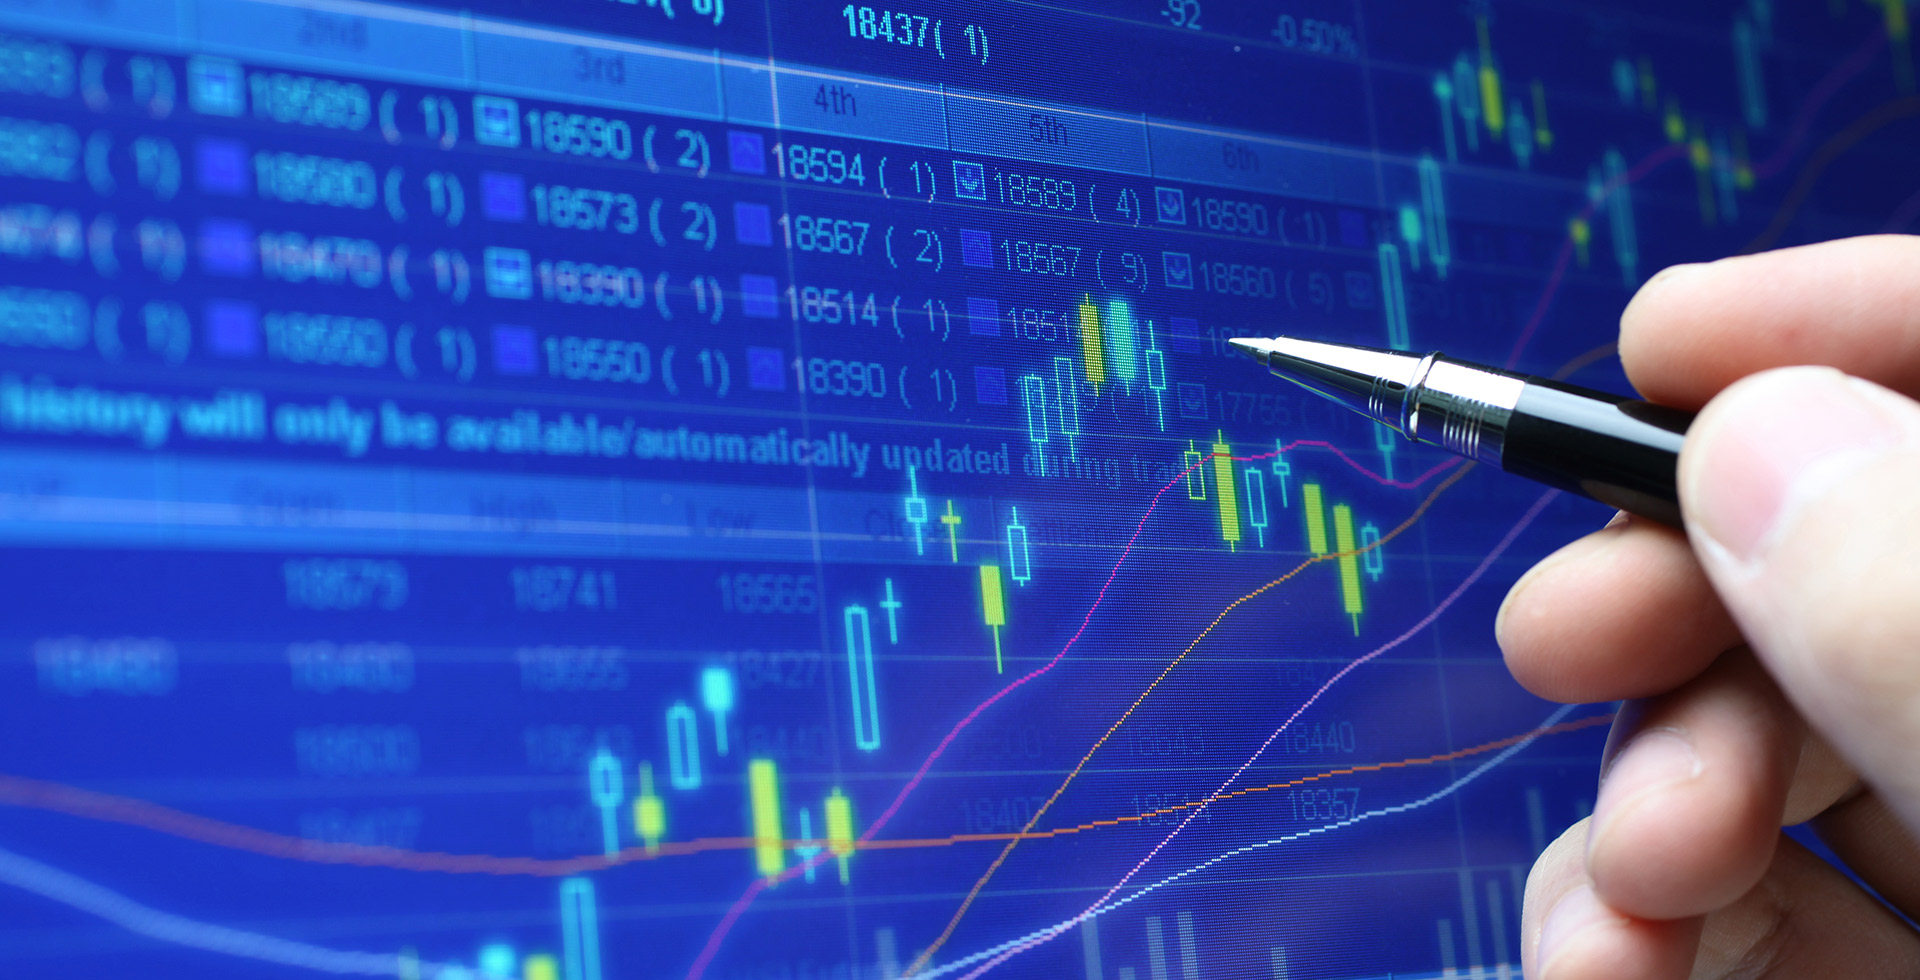 Analysing a stock market